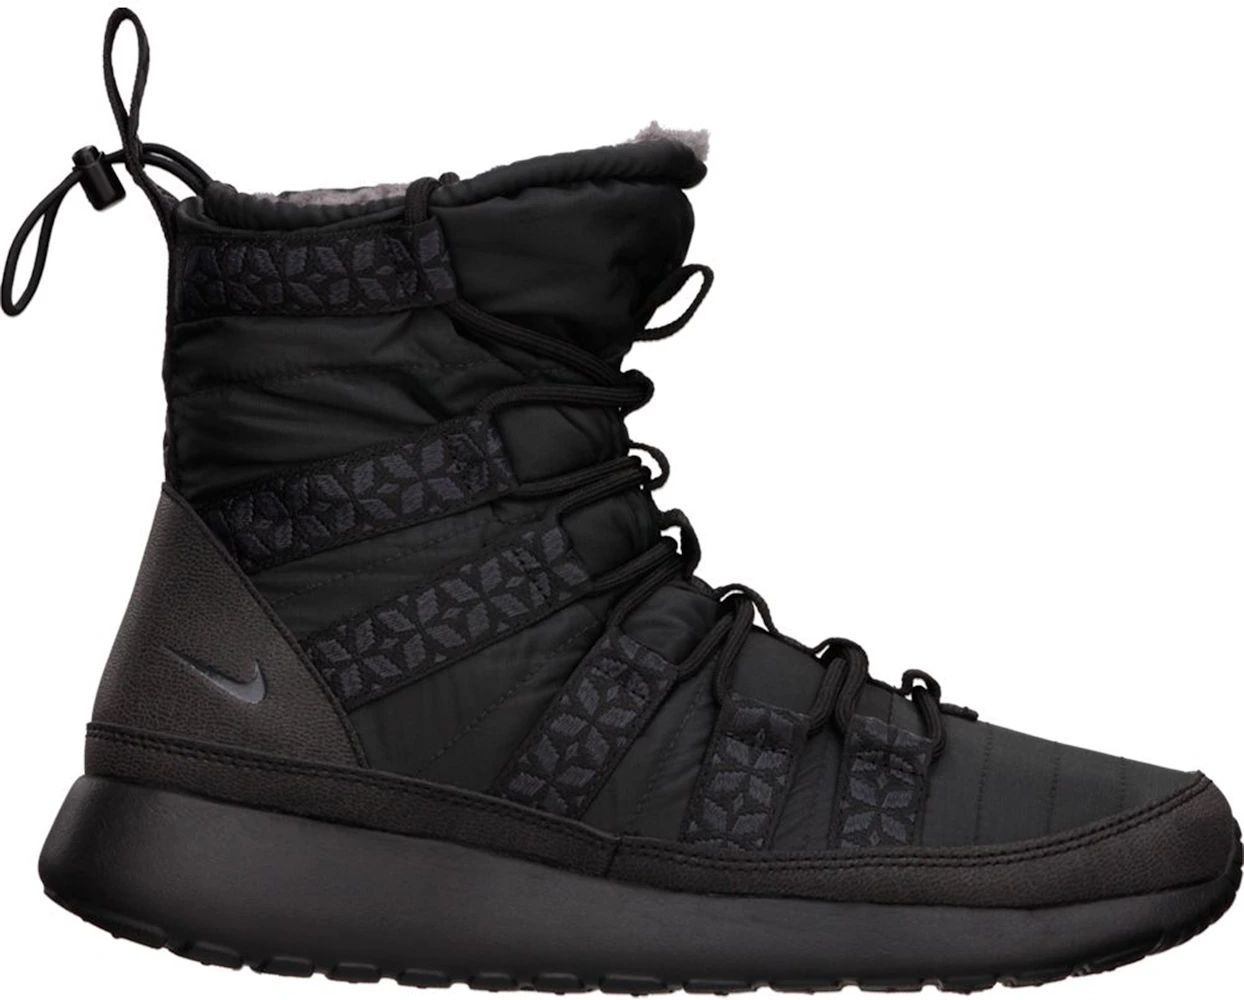 Nike Roshe Run Hi Sneakerboot Black (Women's) -